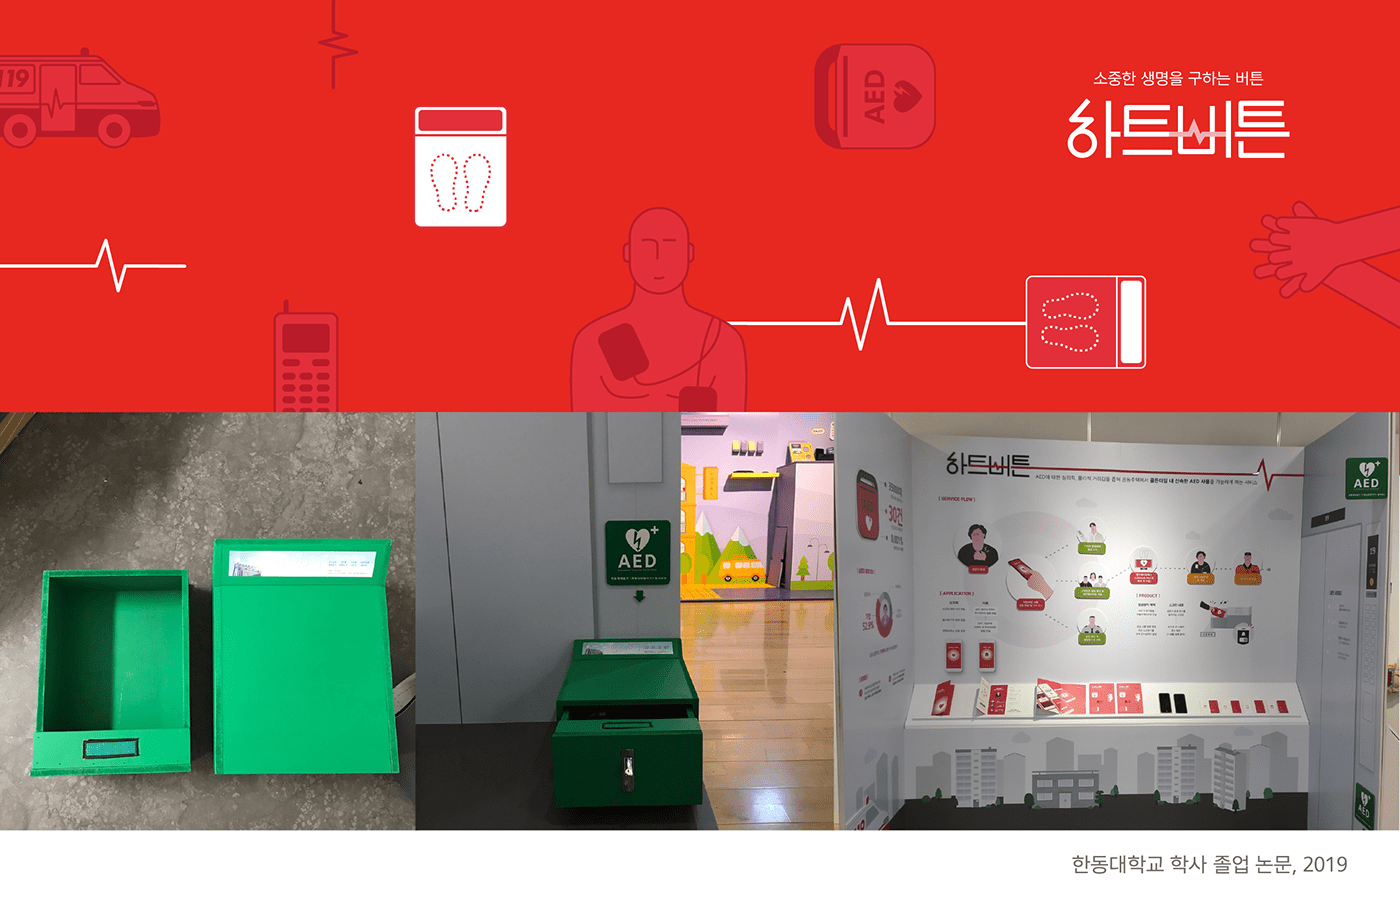 AED app design designer emergency heartbutton service uiux